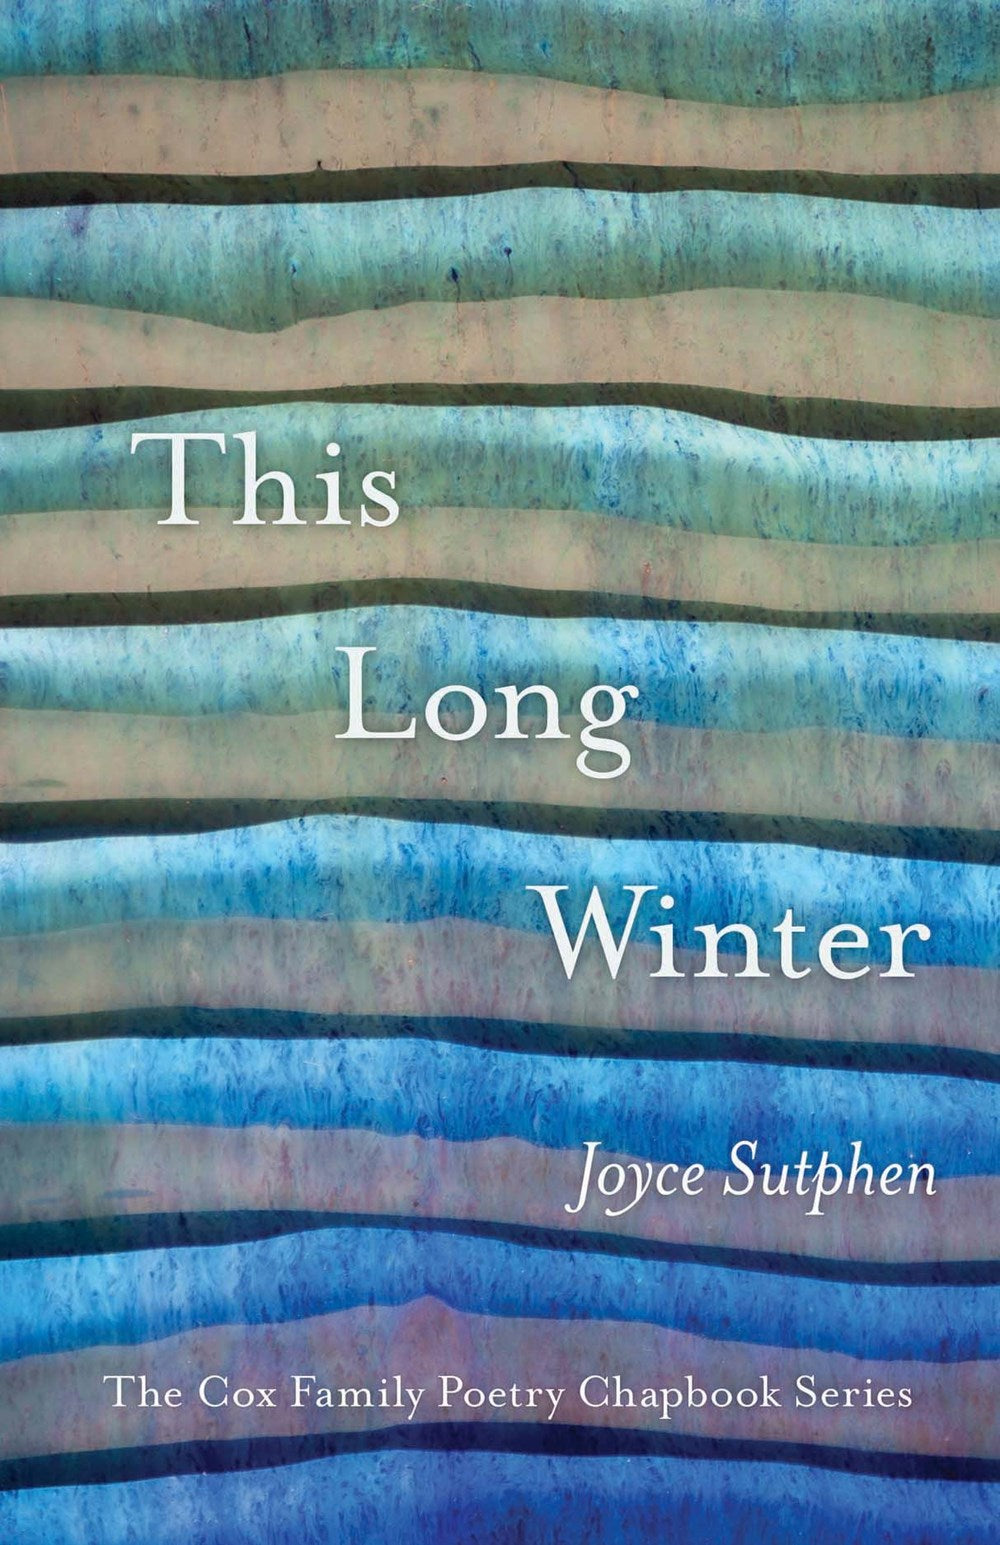 Sutphen, Joyce: This Long Winter